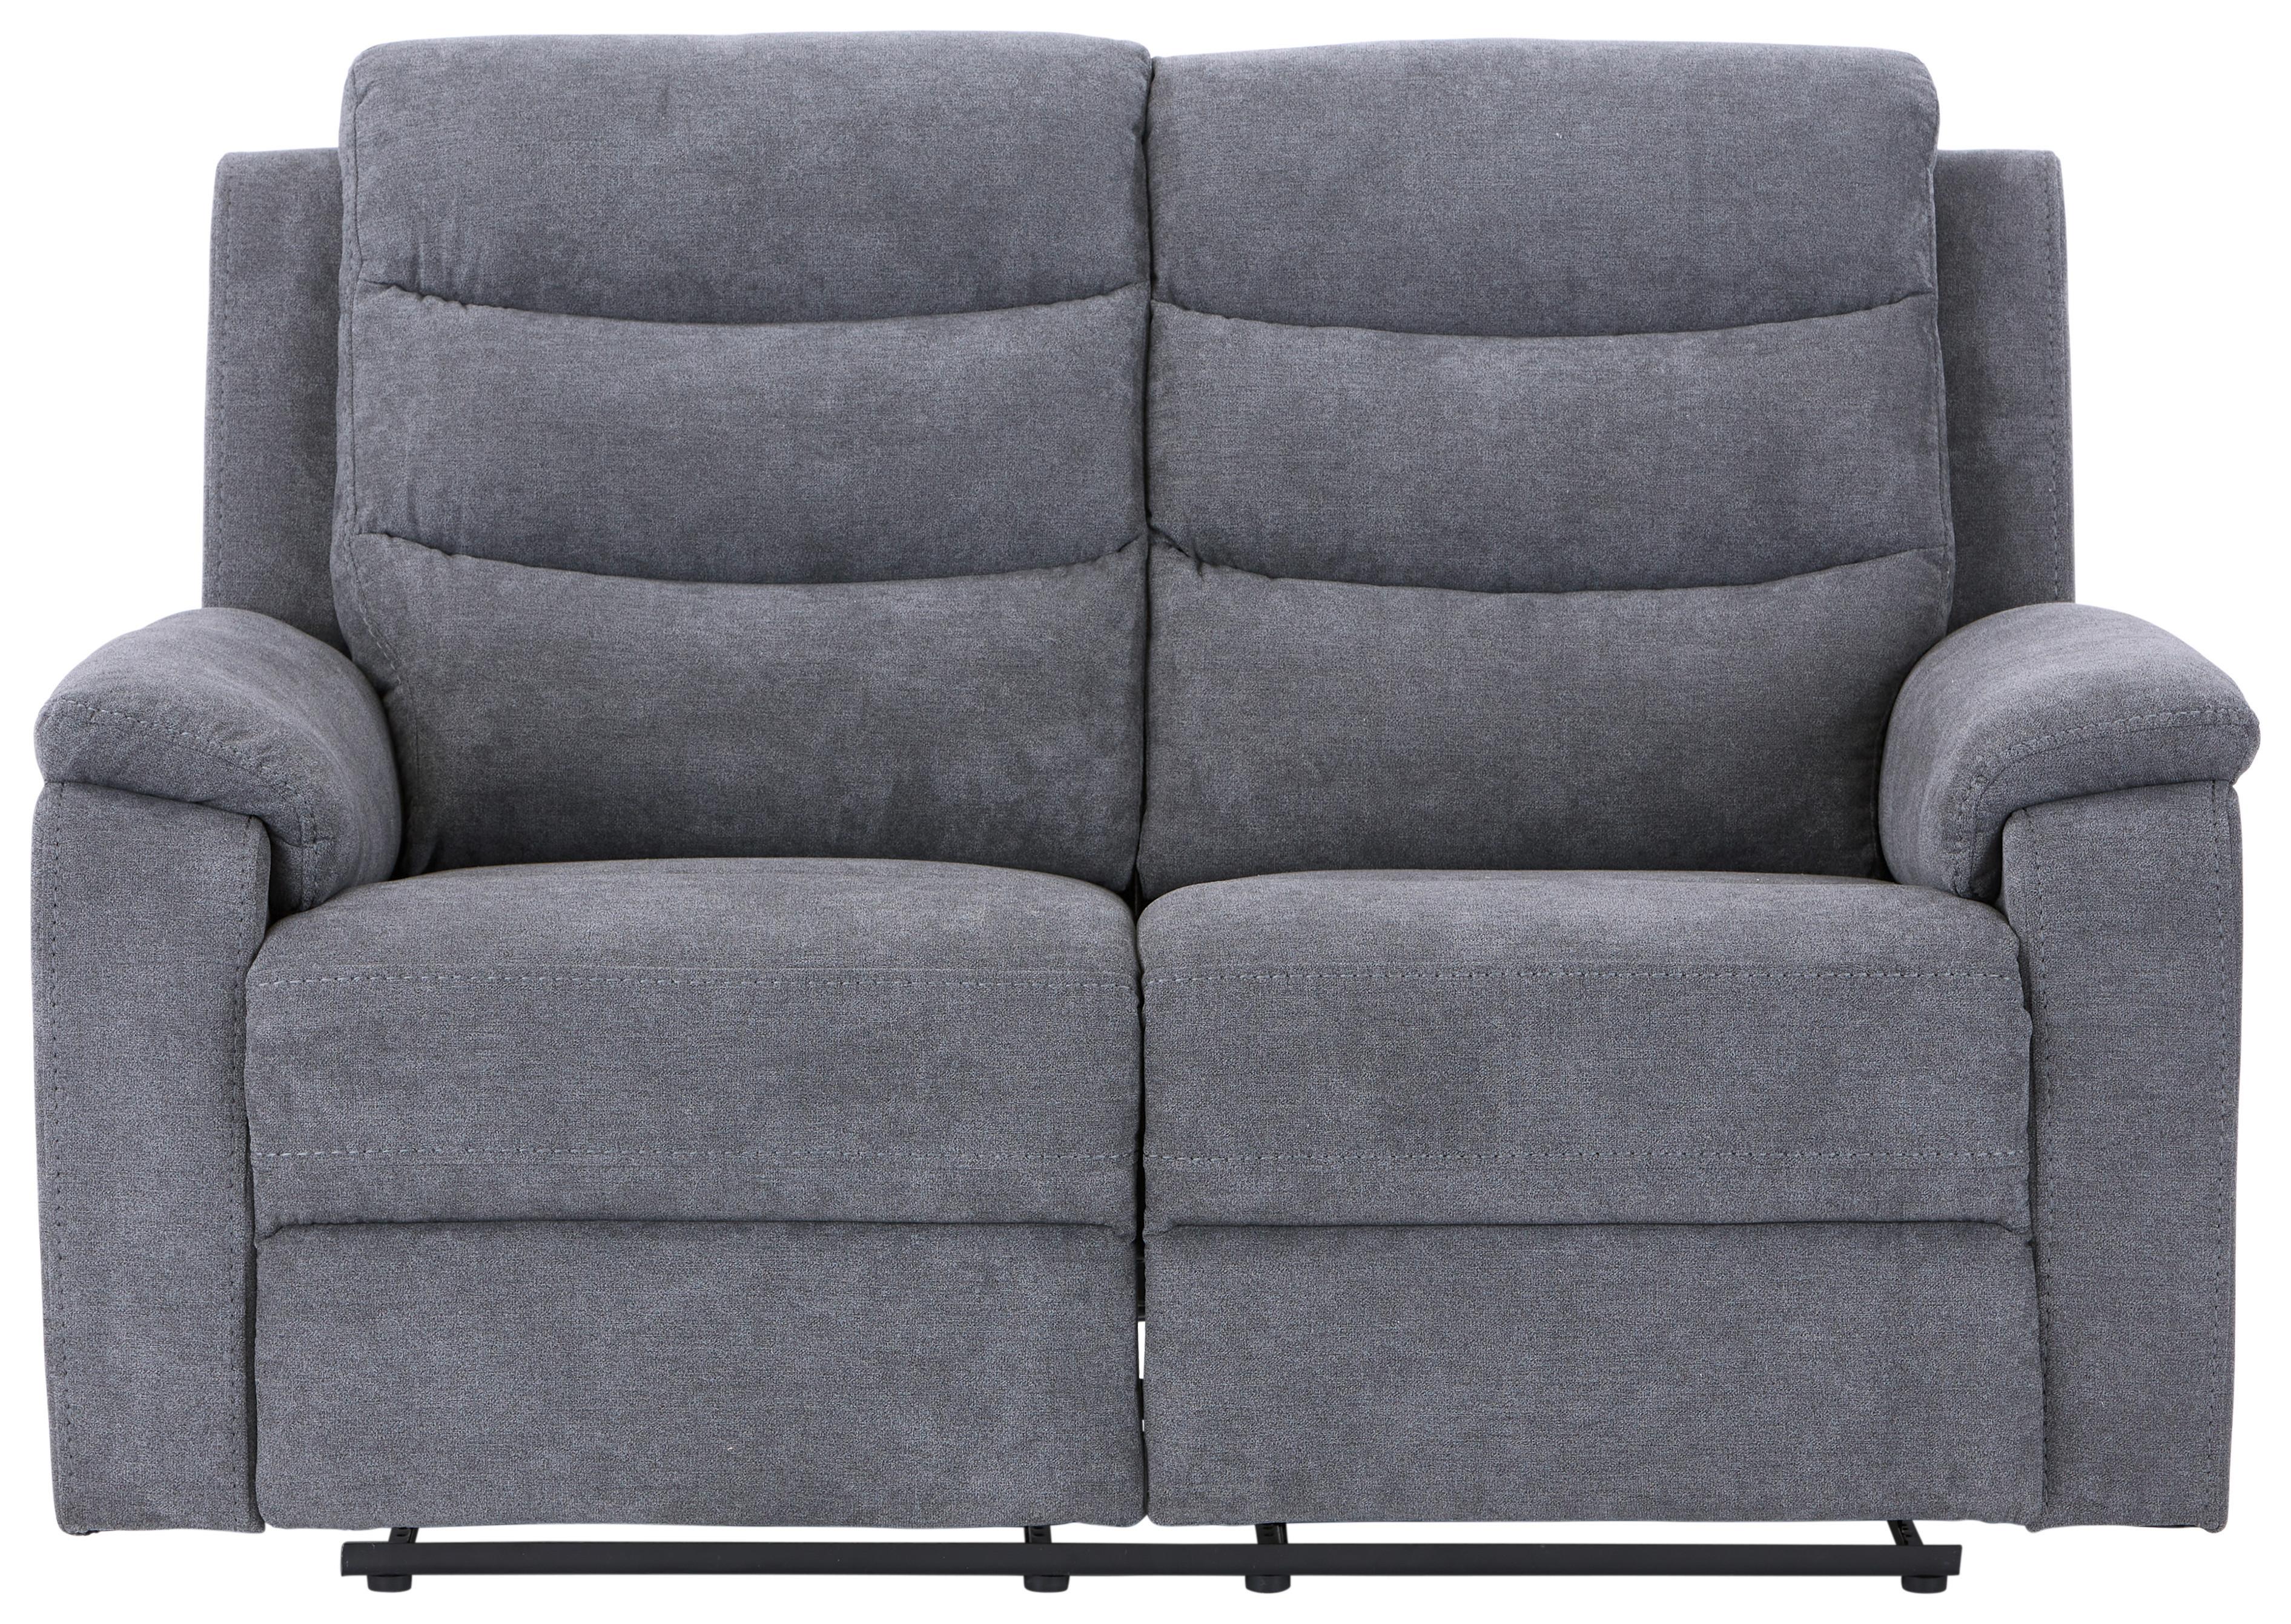 2-Sitzer-Sofa + Relaxfunktion Manchester Grau - Schwarz/Grau, KONVENTIONELL, Holz/Textil (153/102/93cm) - Ondega